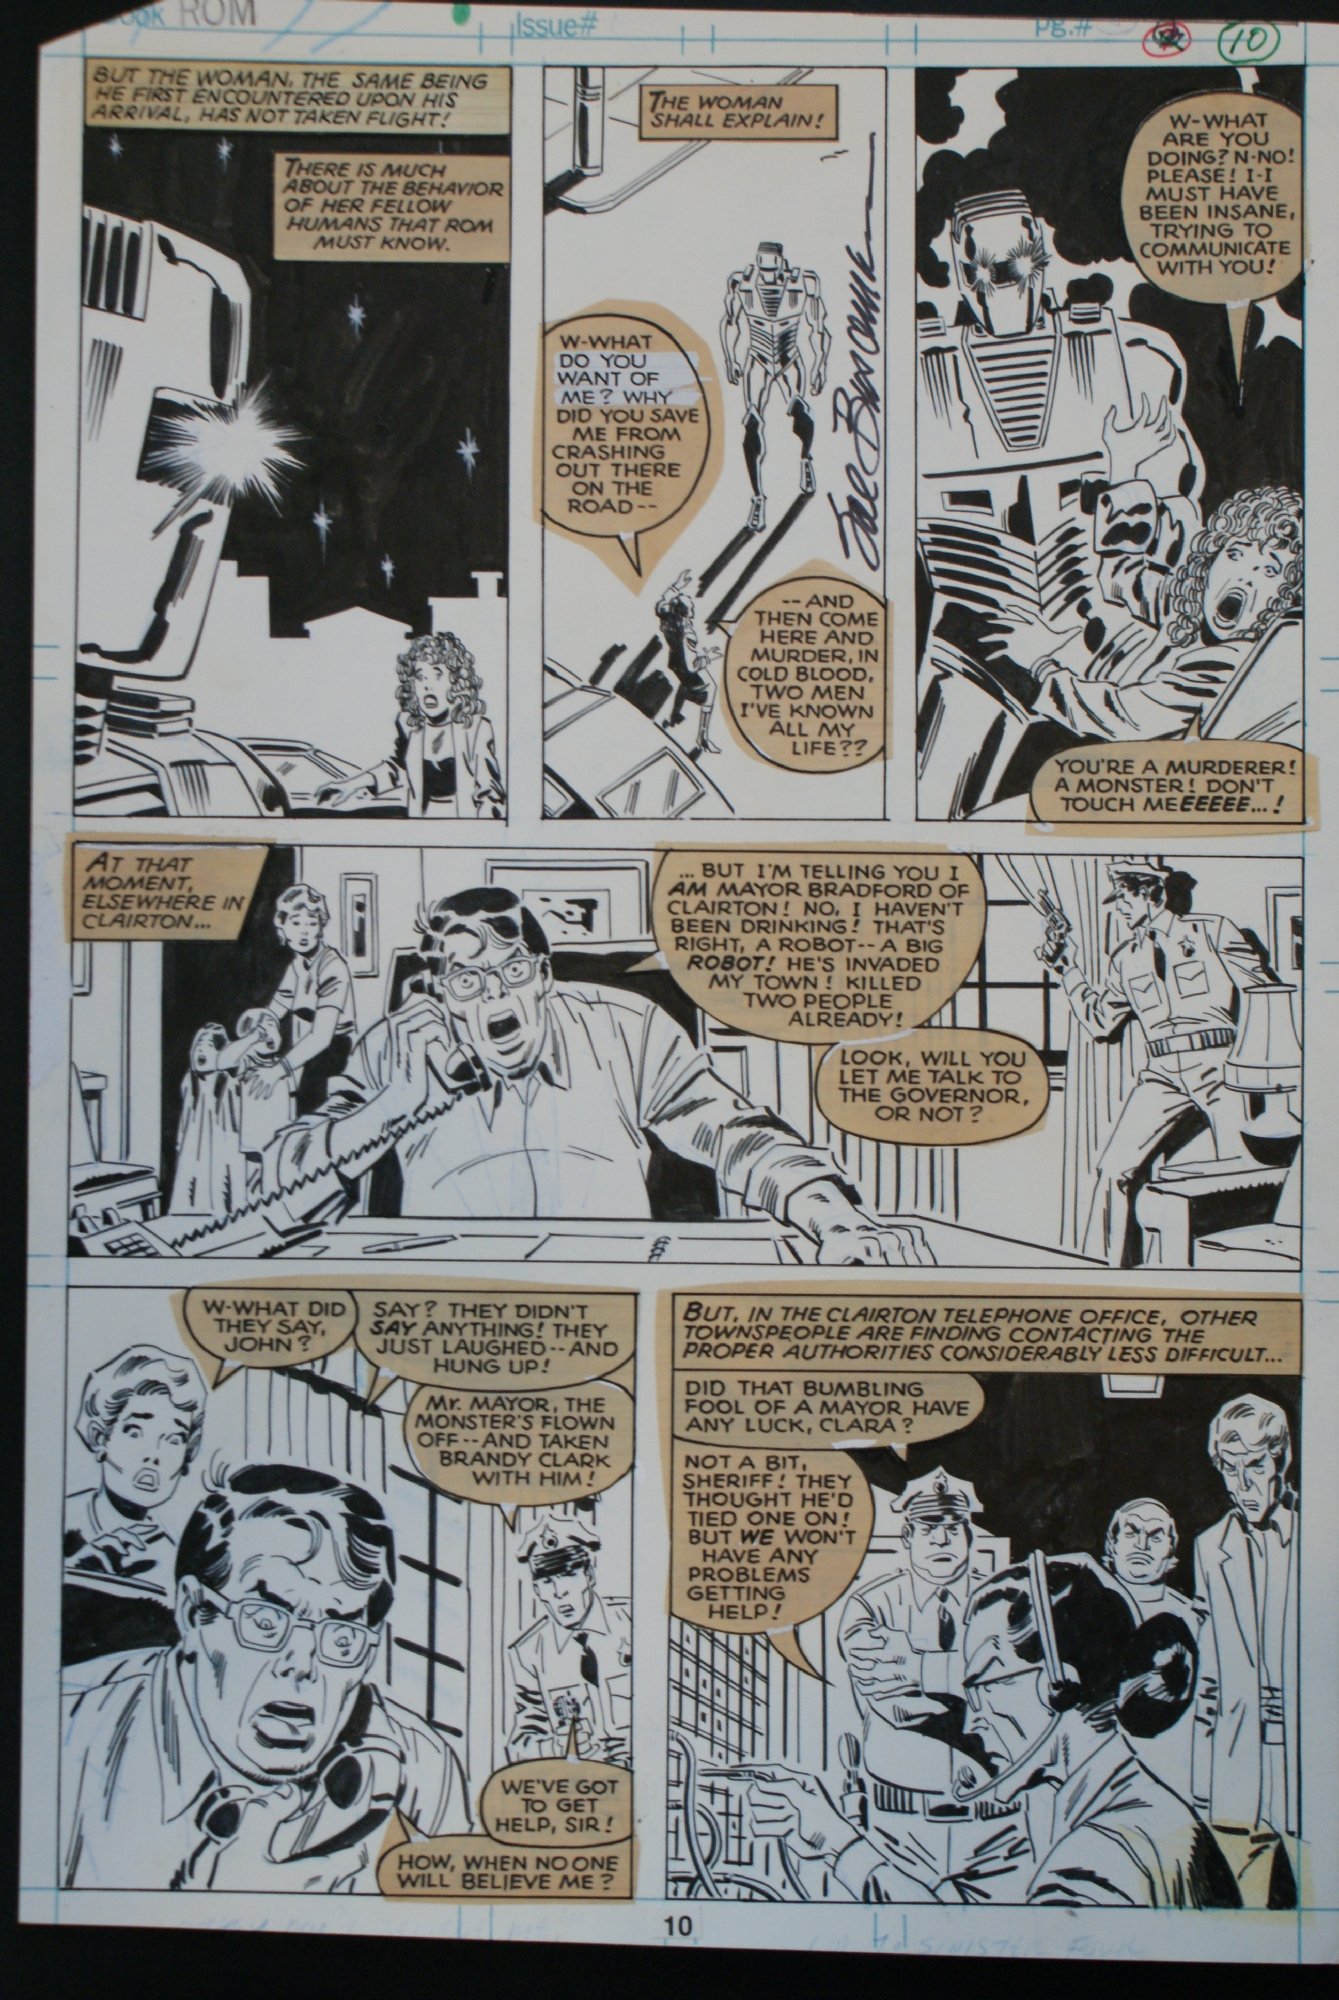 New Mutants #2, in Steve Lawrence's Published Art Comic Art Gallery Room